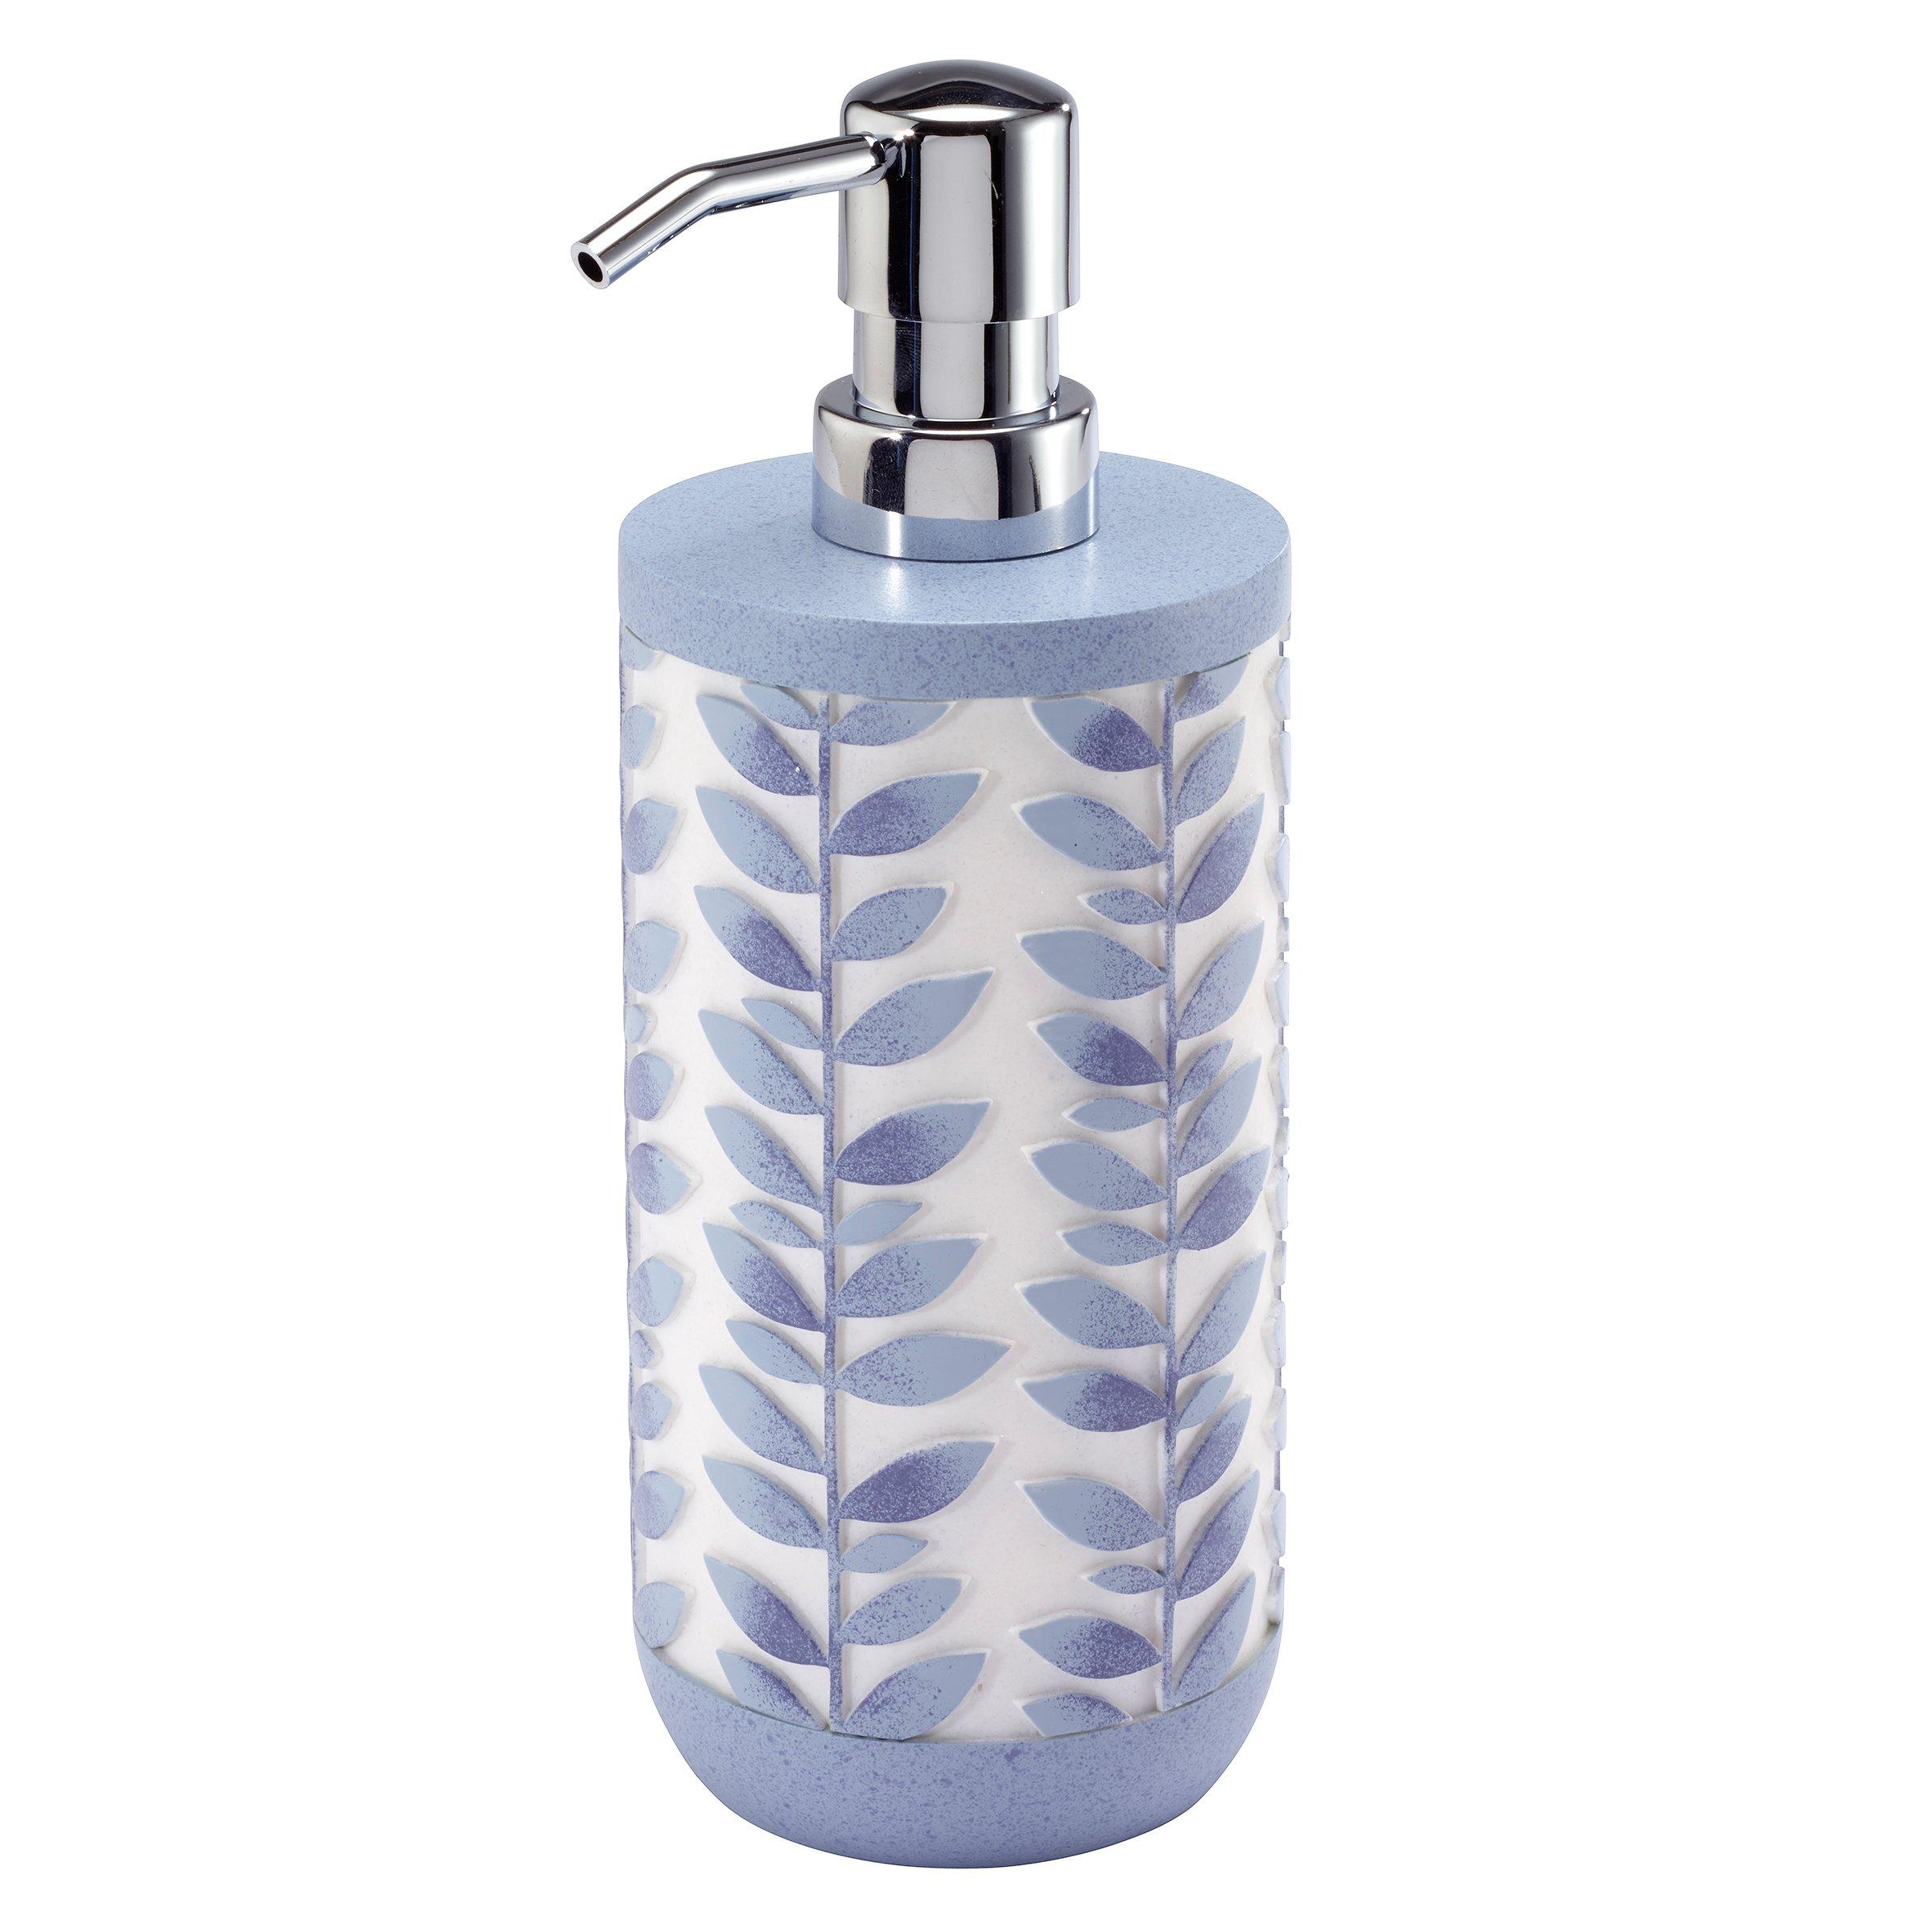 Monterey Bathroom Collection Soap Dispenser / Lotion Pump